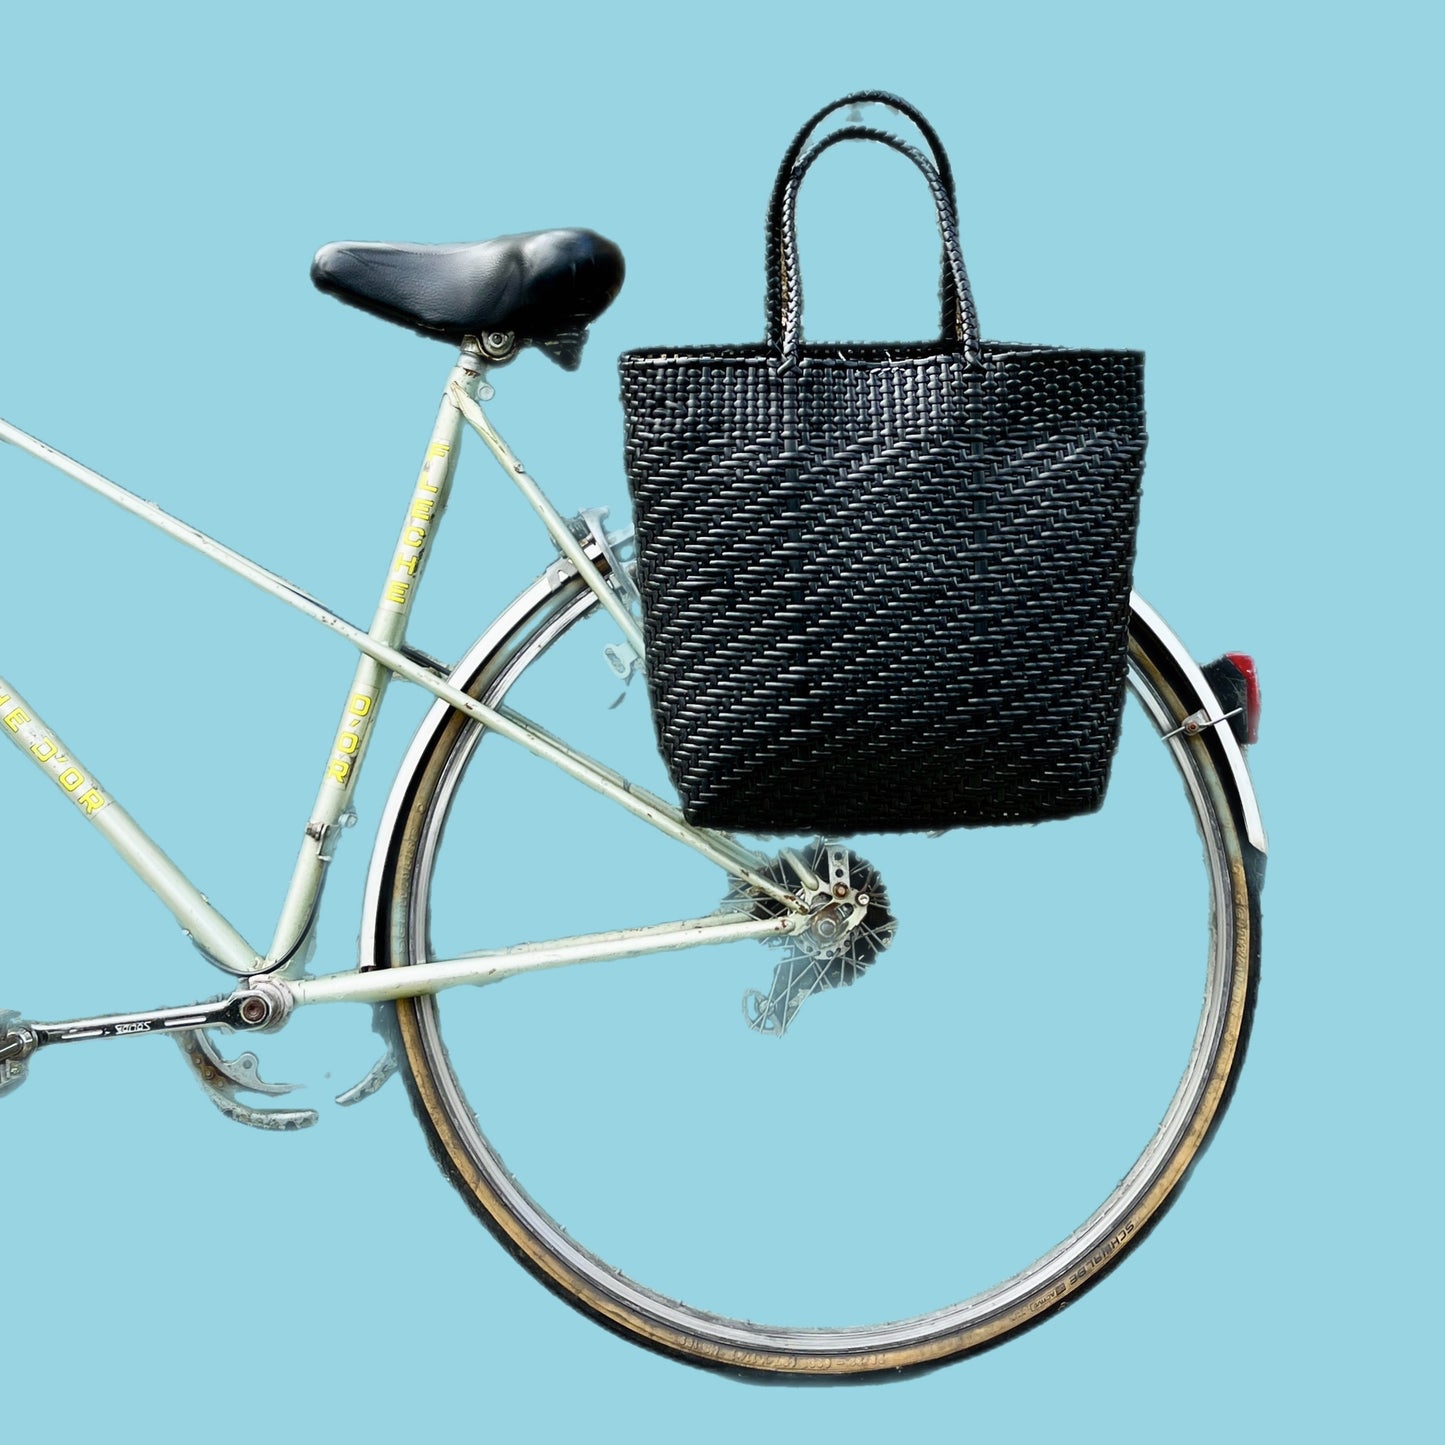 Goodordering woven basket pannier bag bike bag 